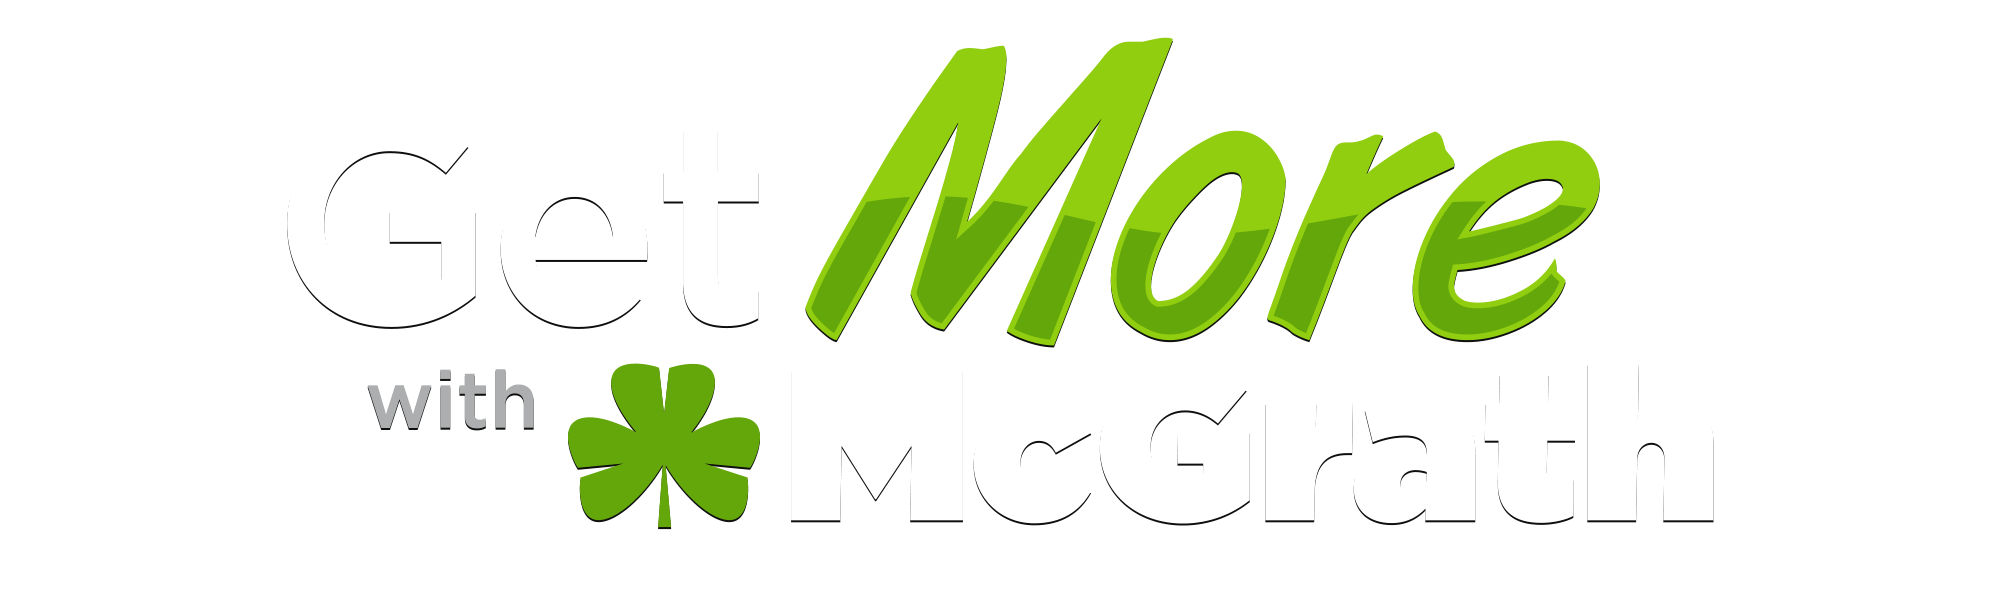 Get More with McGrath